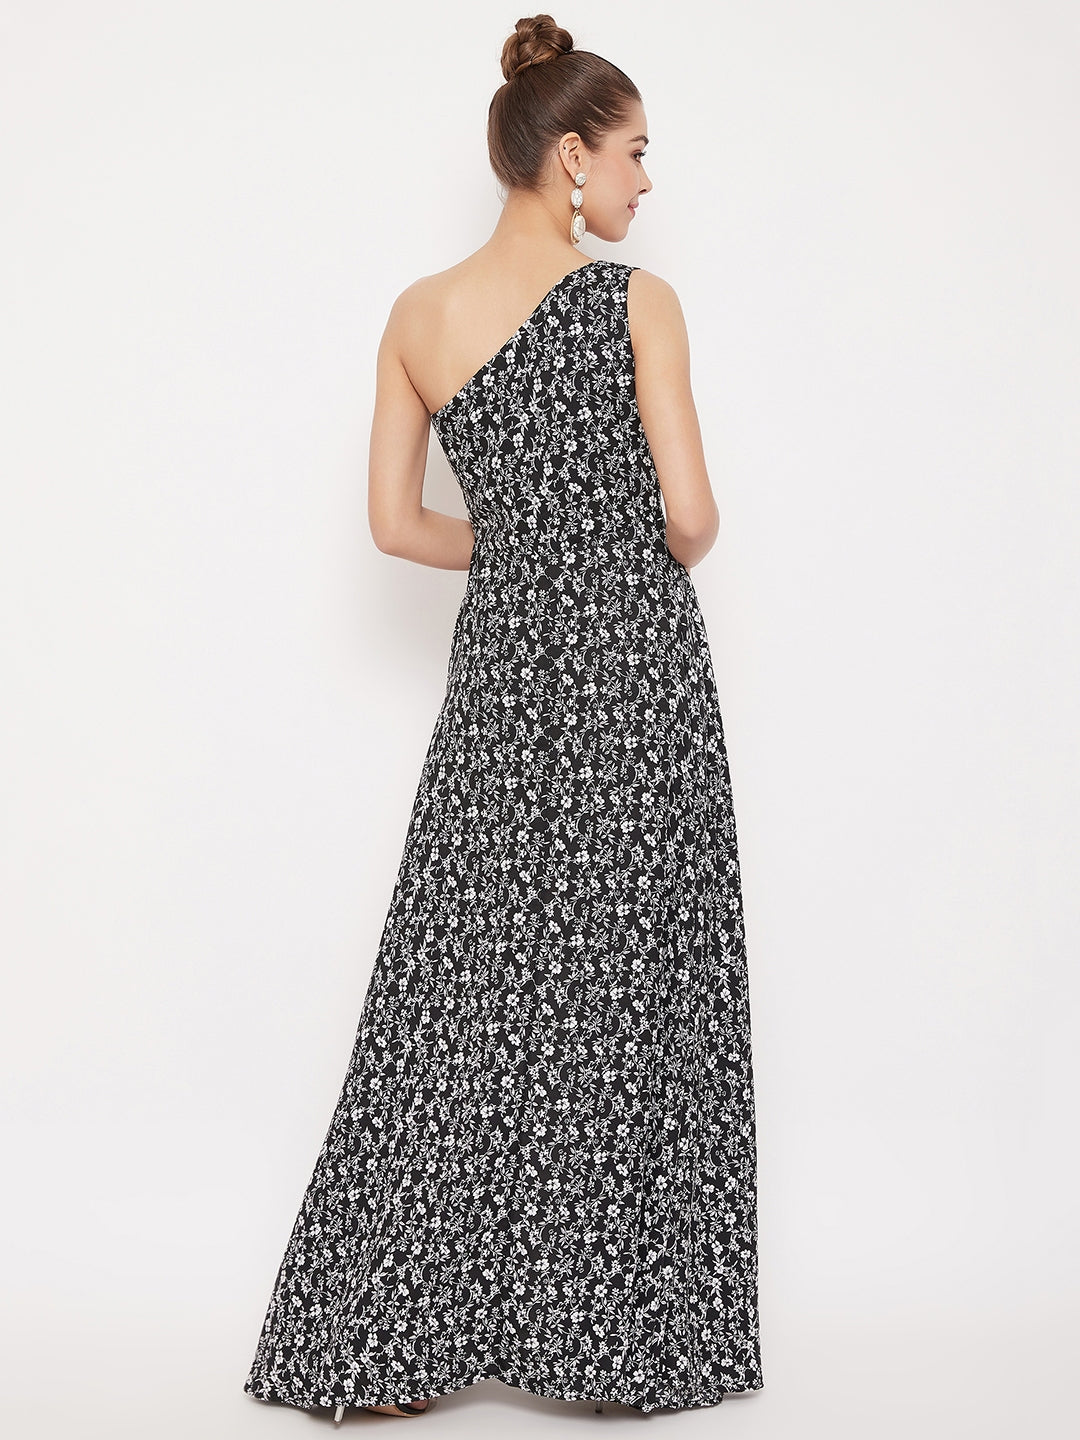 Berrylush Women Black & White Floral Printed One Shoulder Maxi Dress